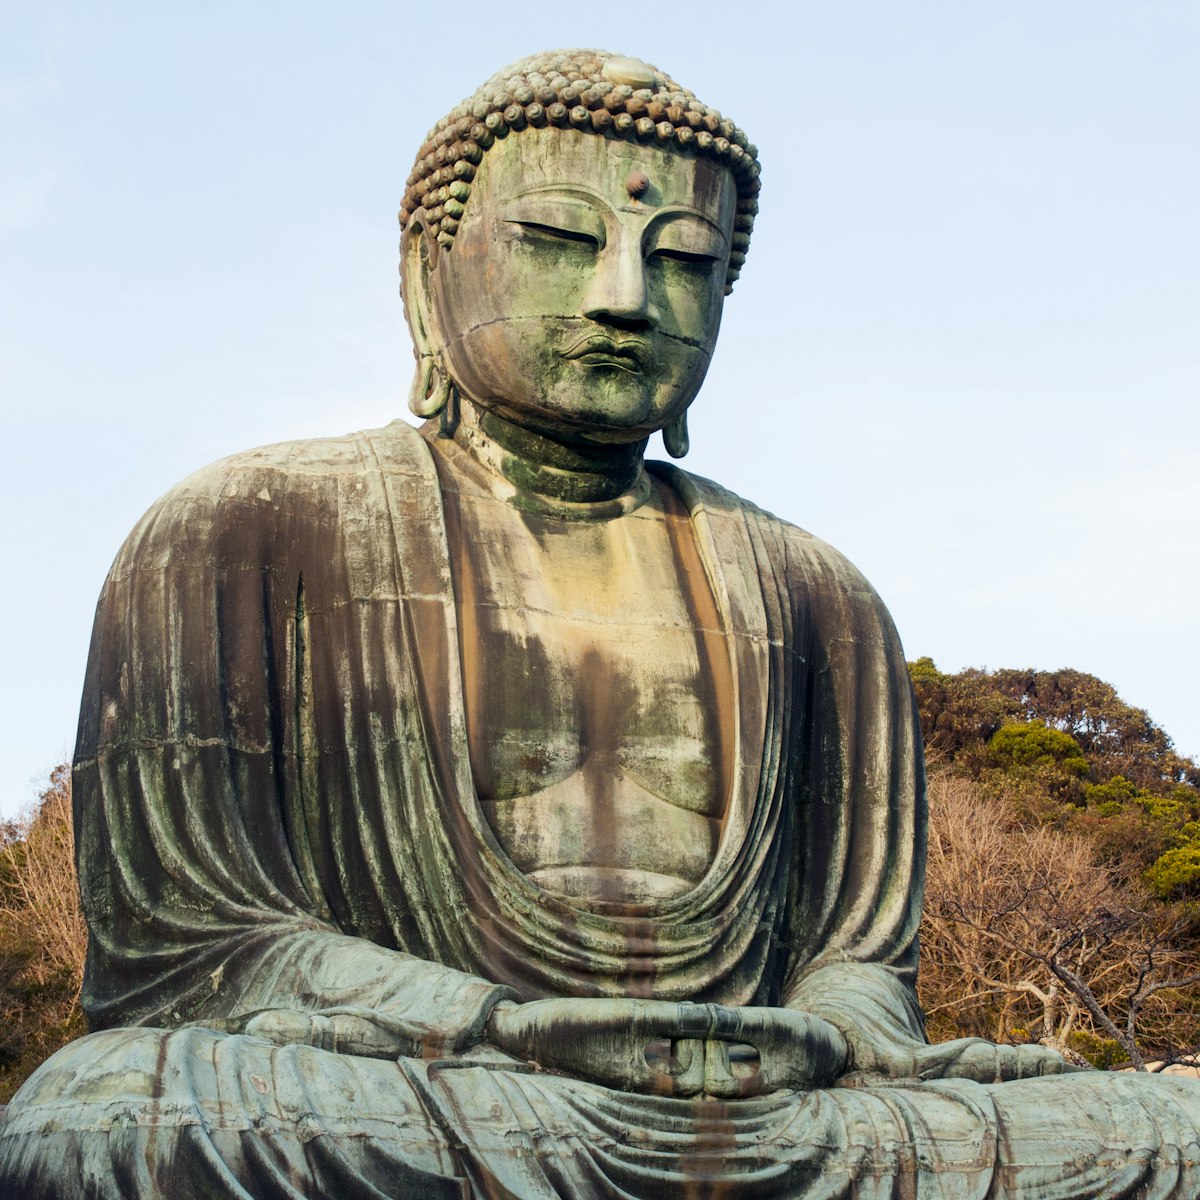 Daibatsu (Great Buddha) of Kamakura